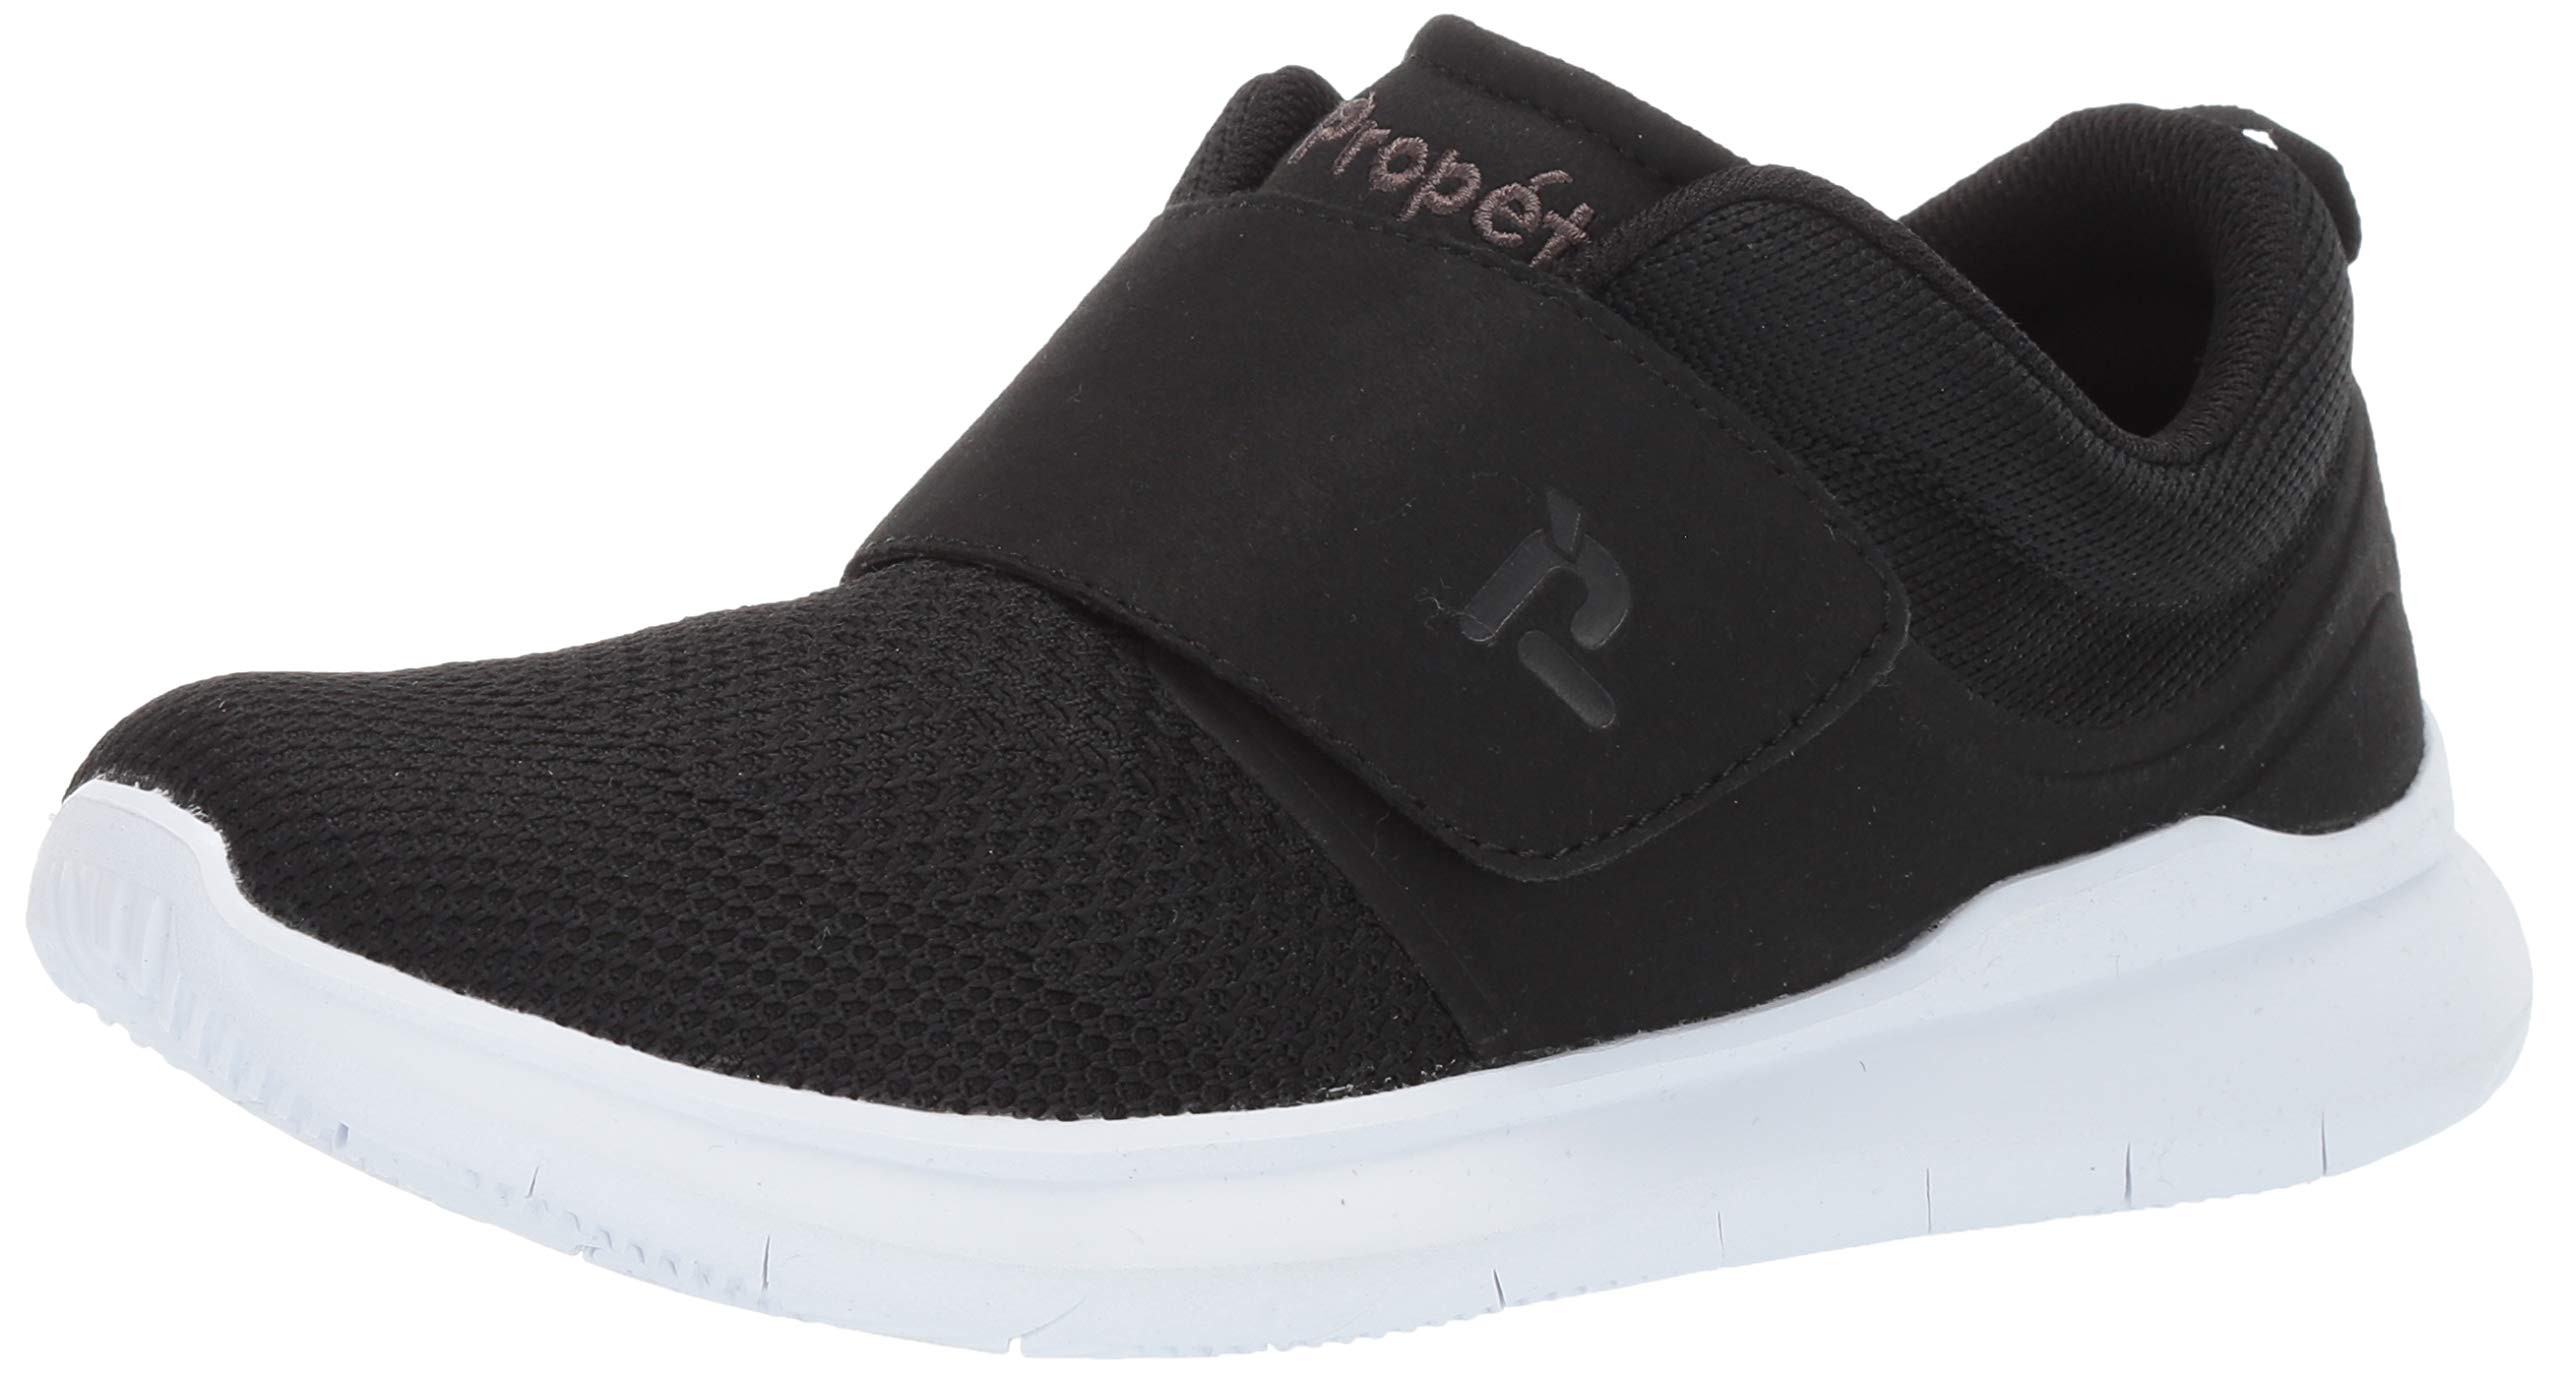 Propet Mens Viator Strap Walking Walking Sneakers Shoes - Black